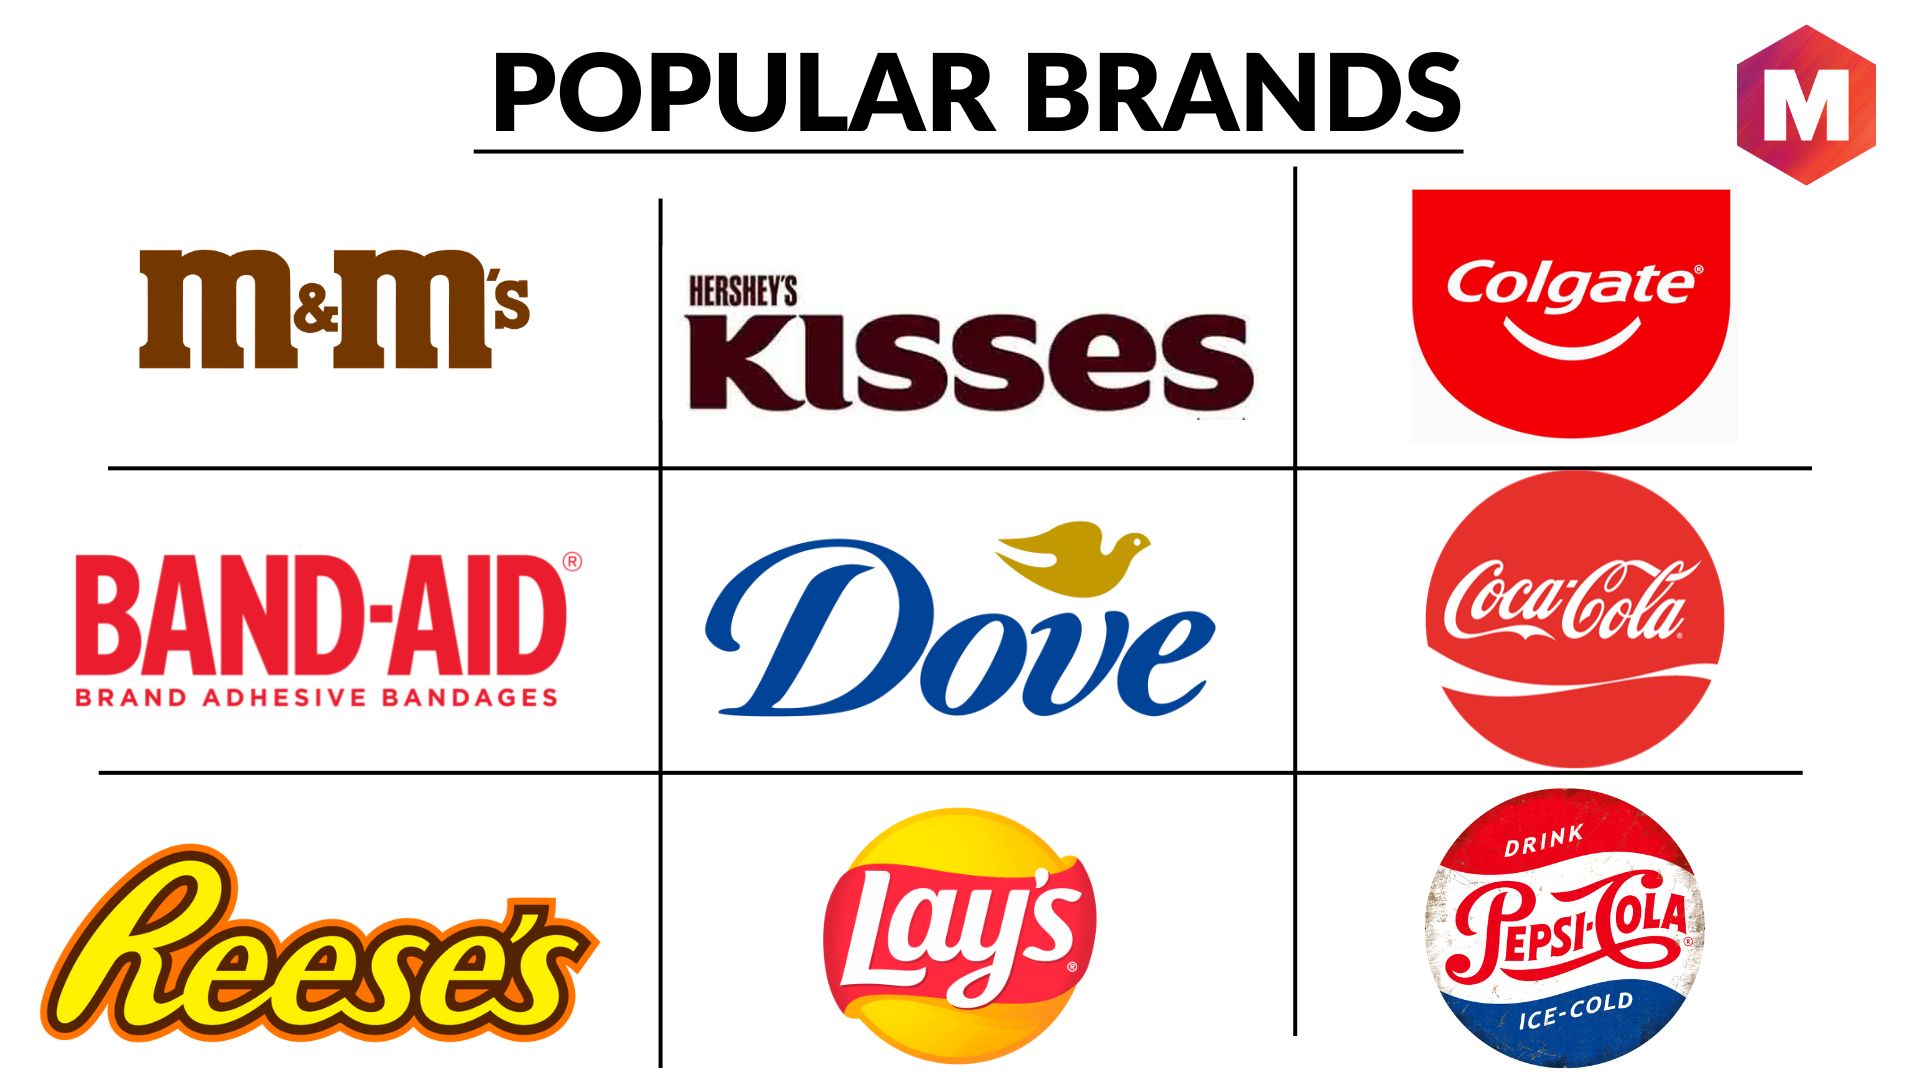 Pepeganga, Brands of the World™